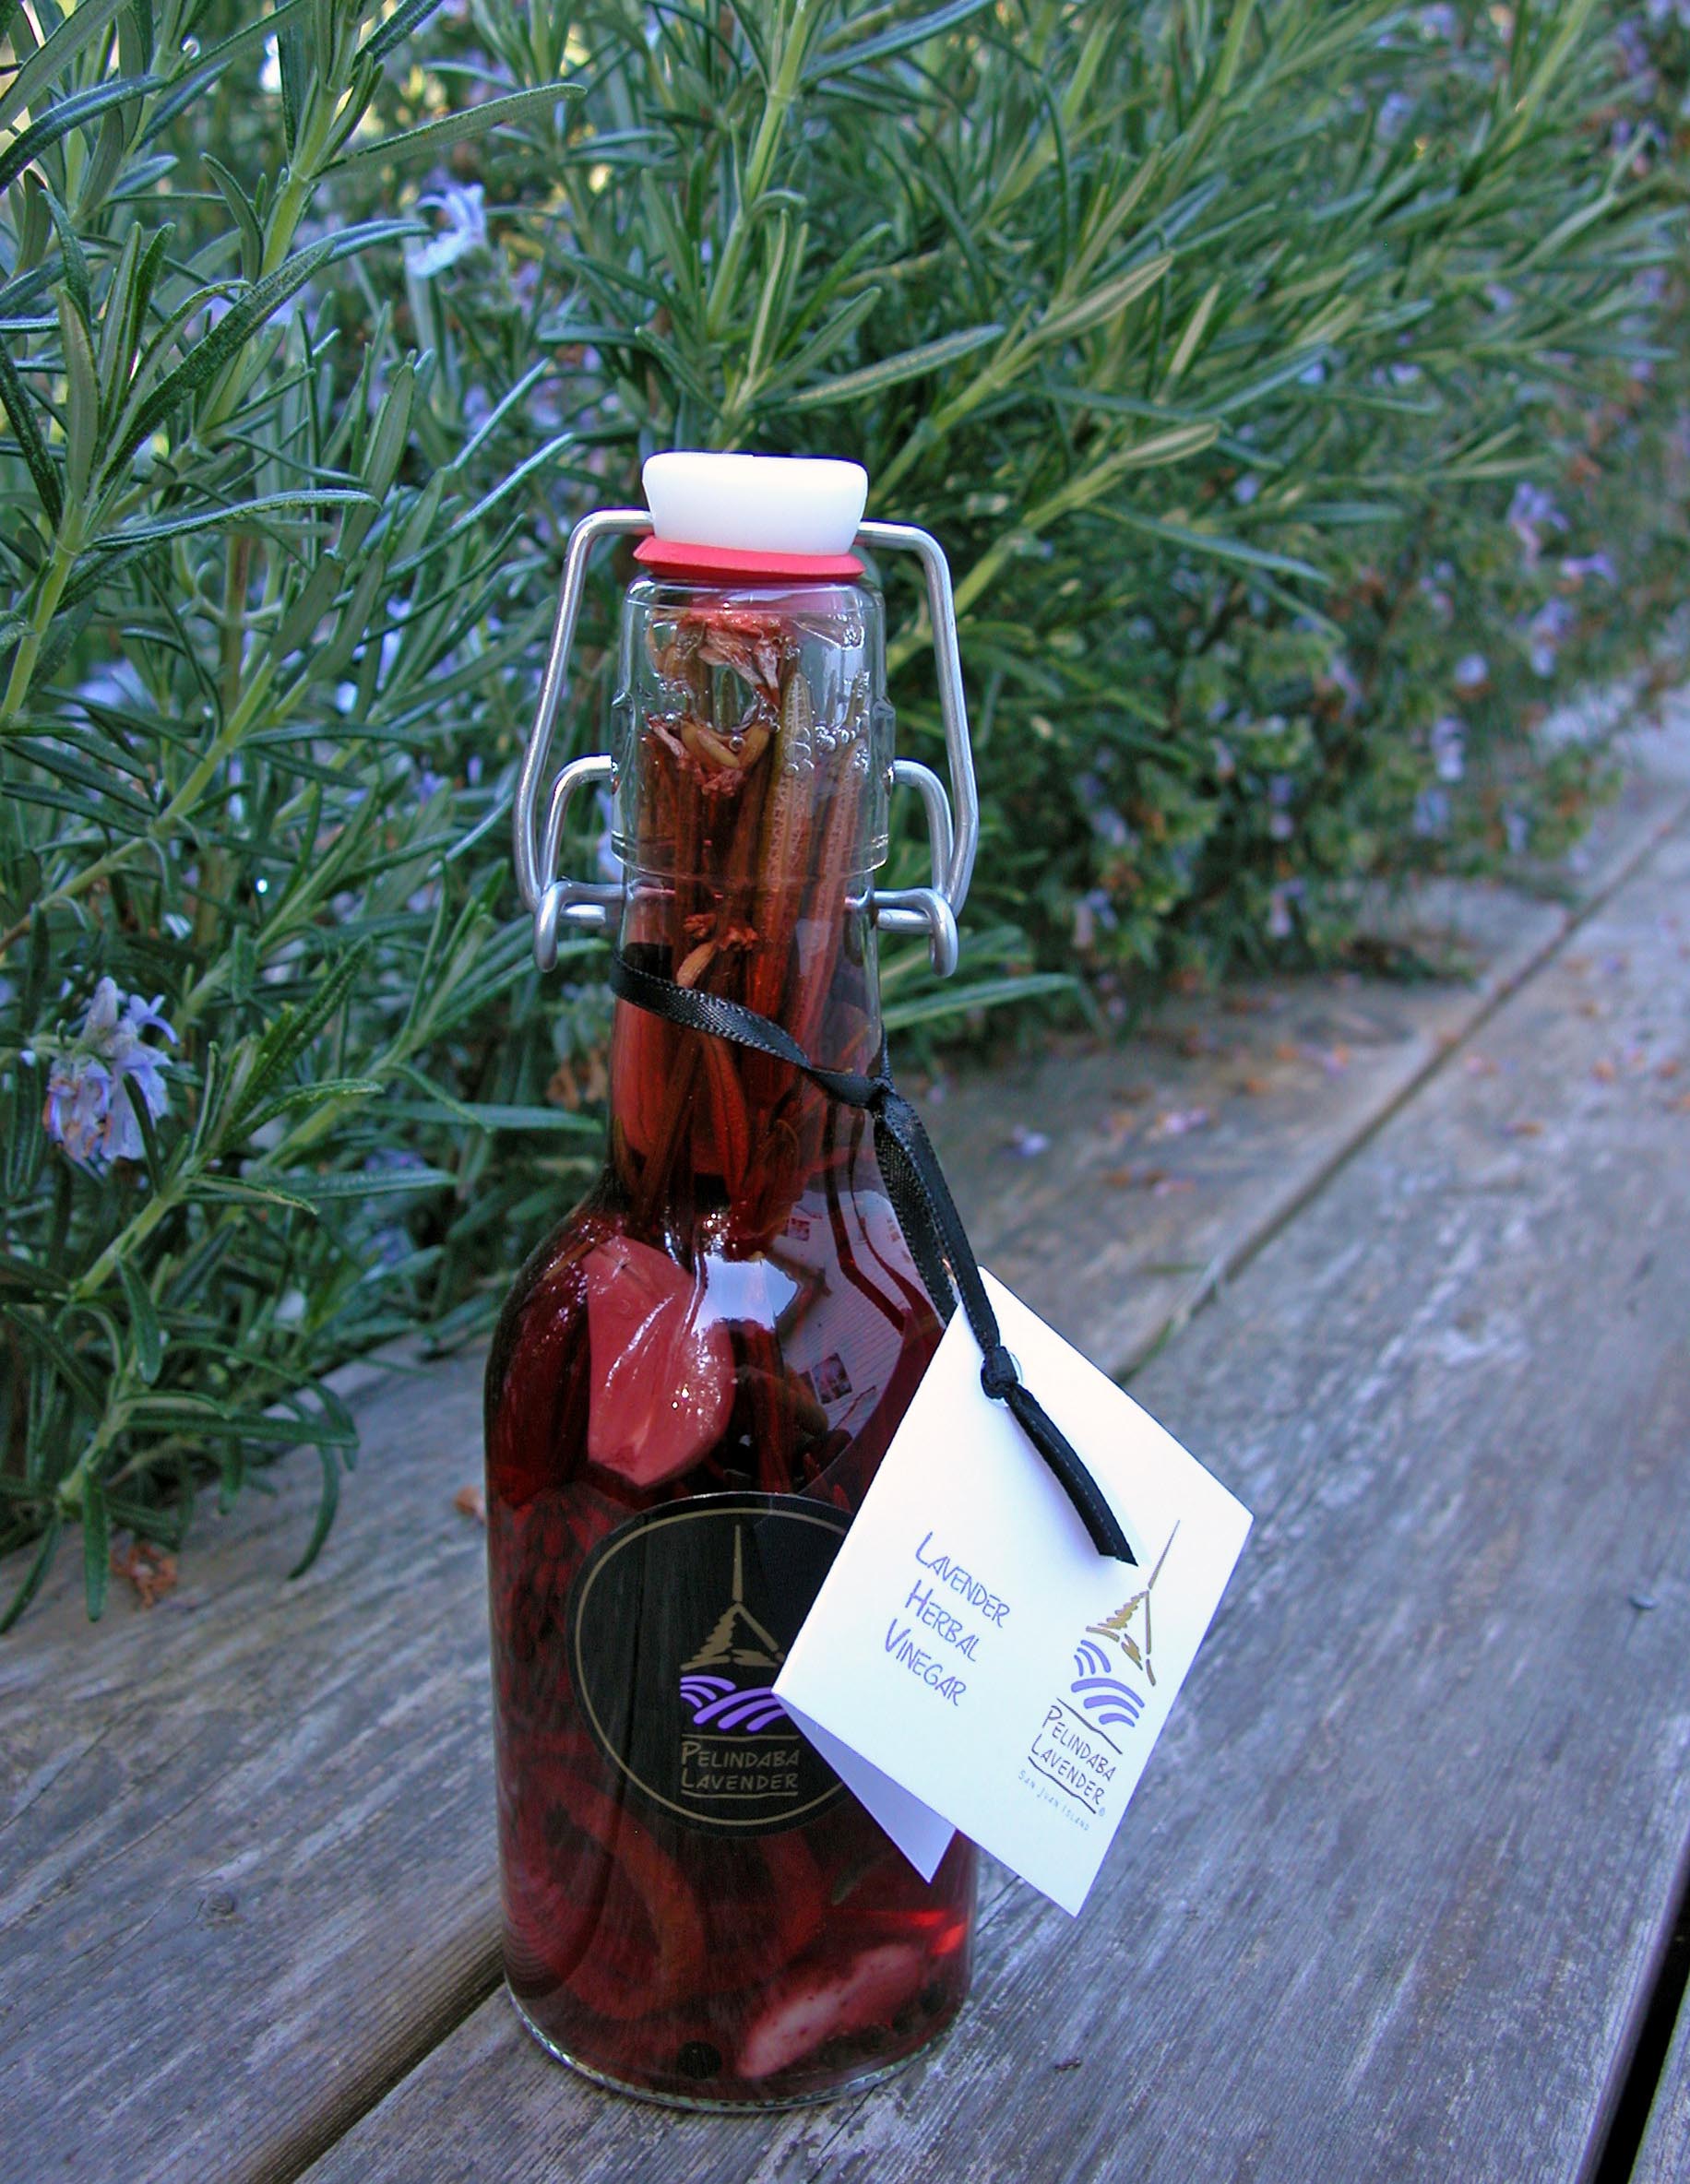 pelindaba lavender vinegar products from Pelindaba Lavender farm